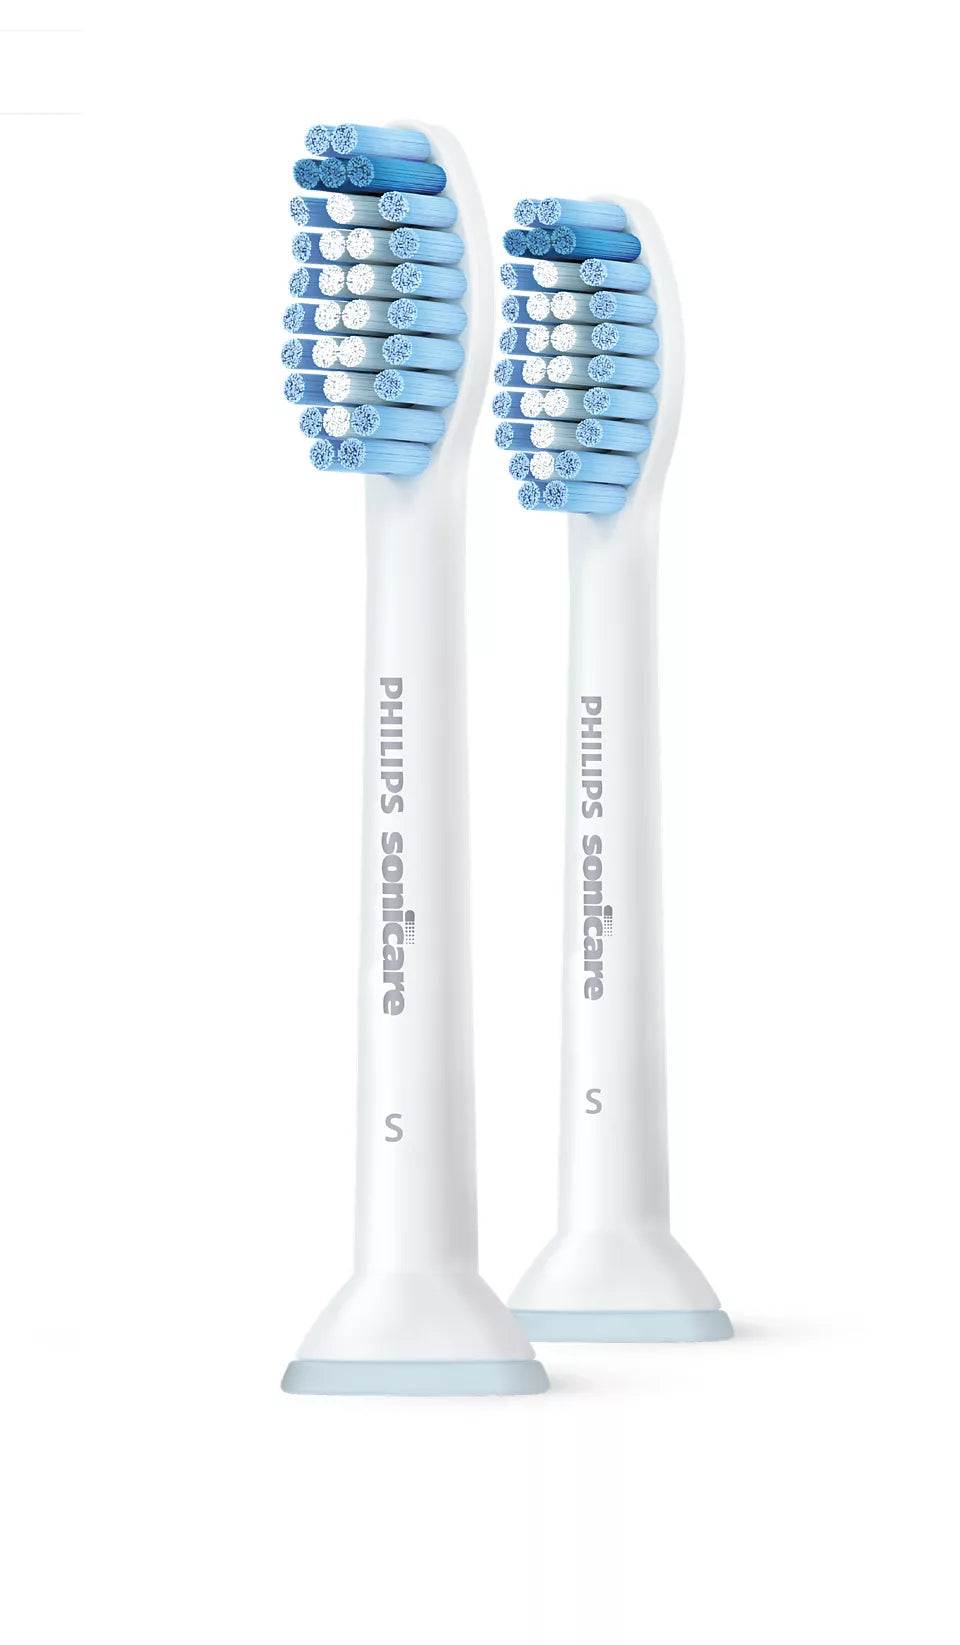 Standard sonic toothbrush heads HX6052 - Wellness Shoppee